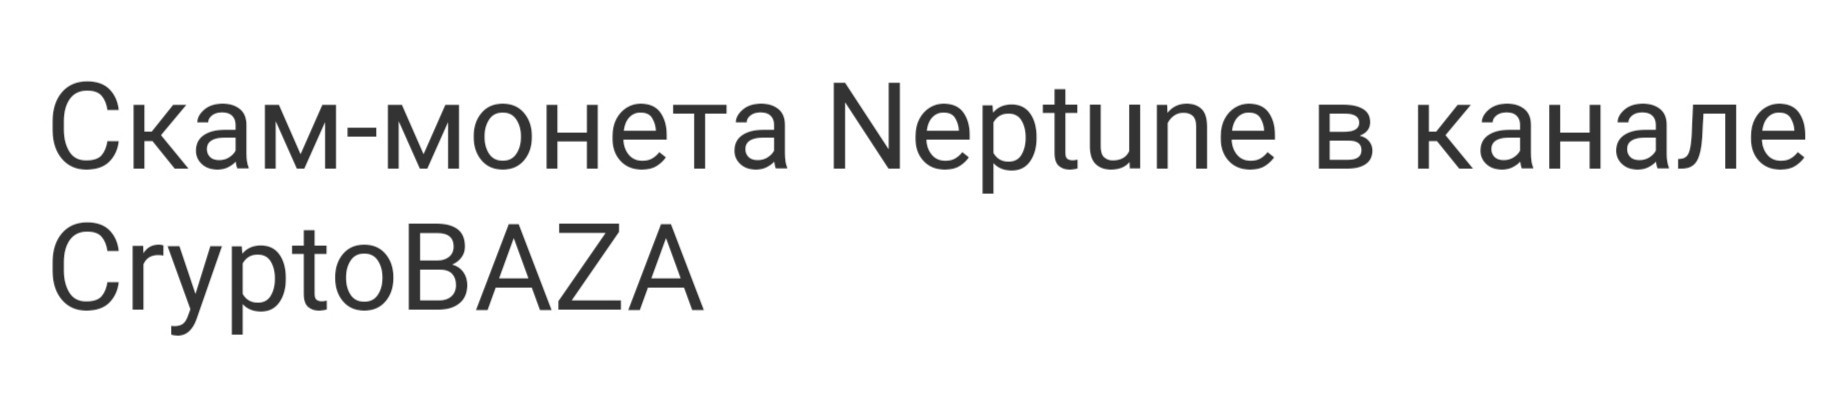 Монета Neptune отзывы